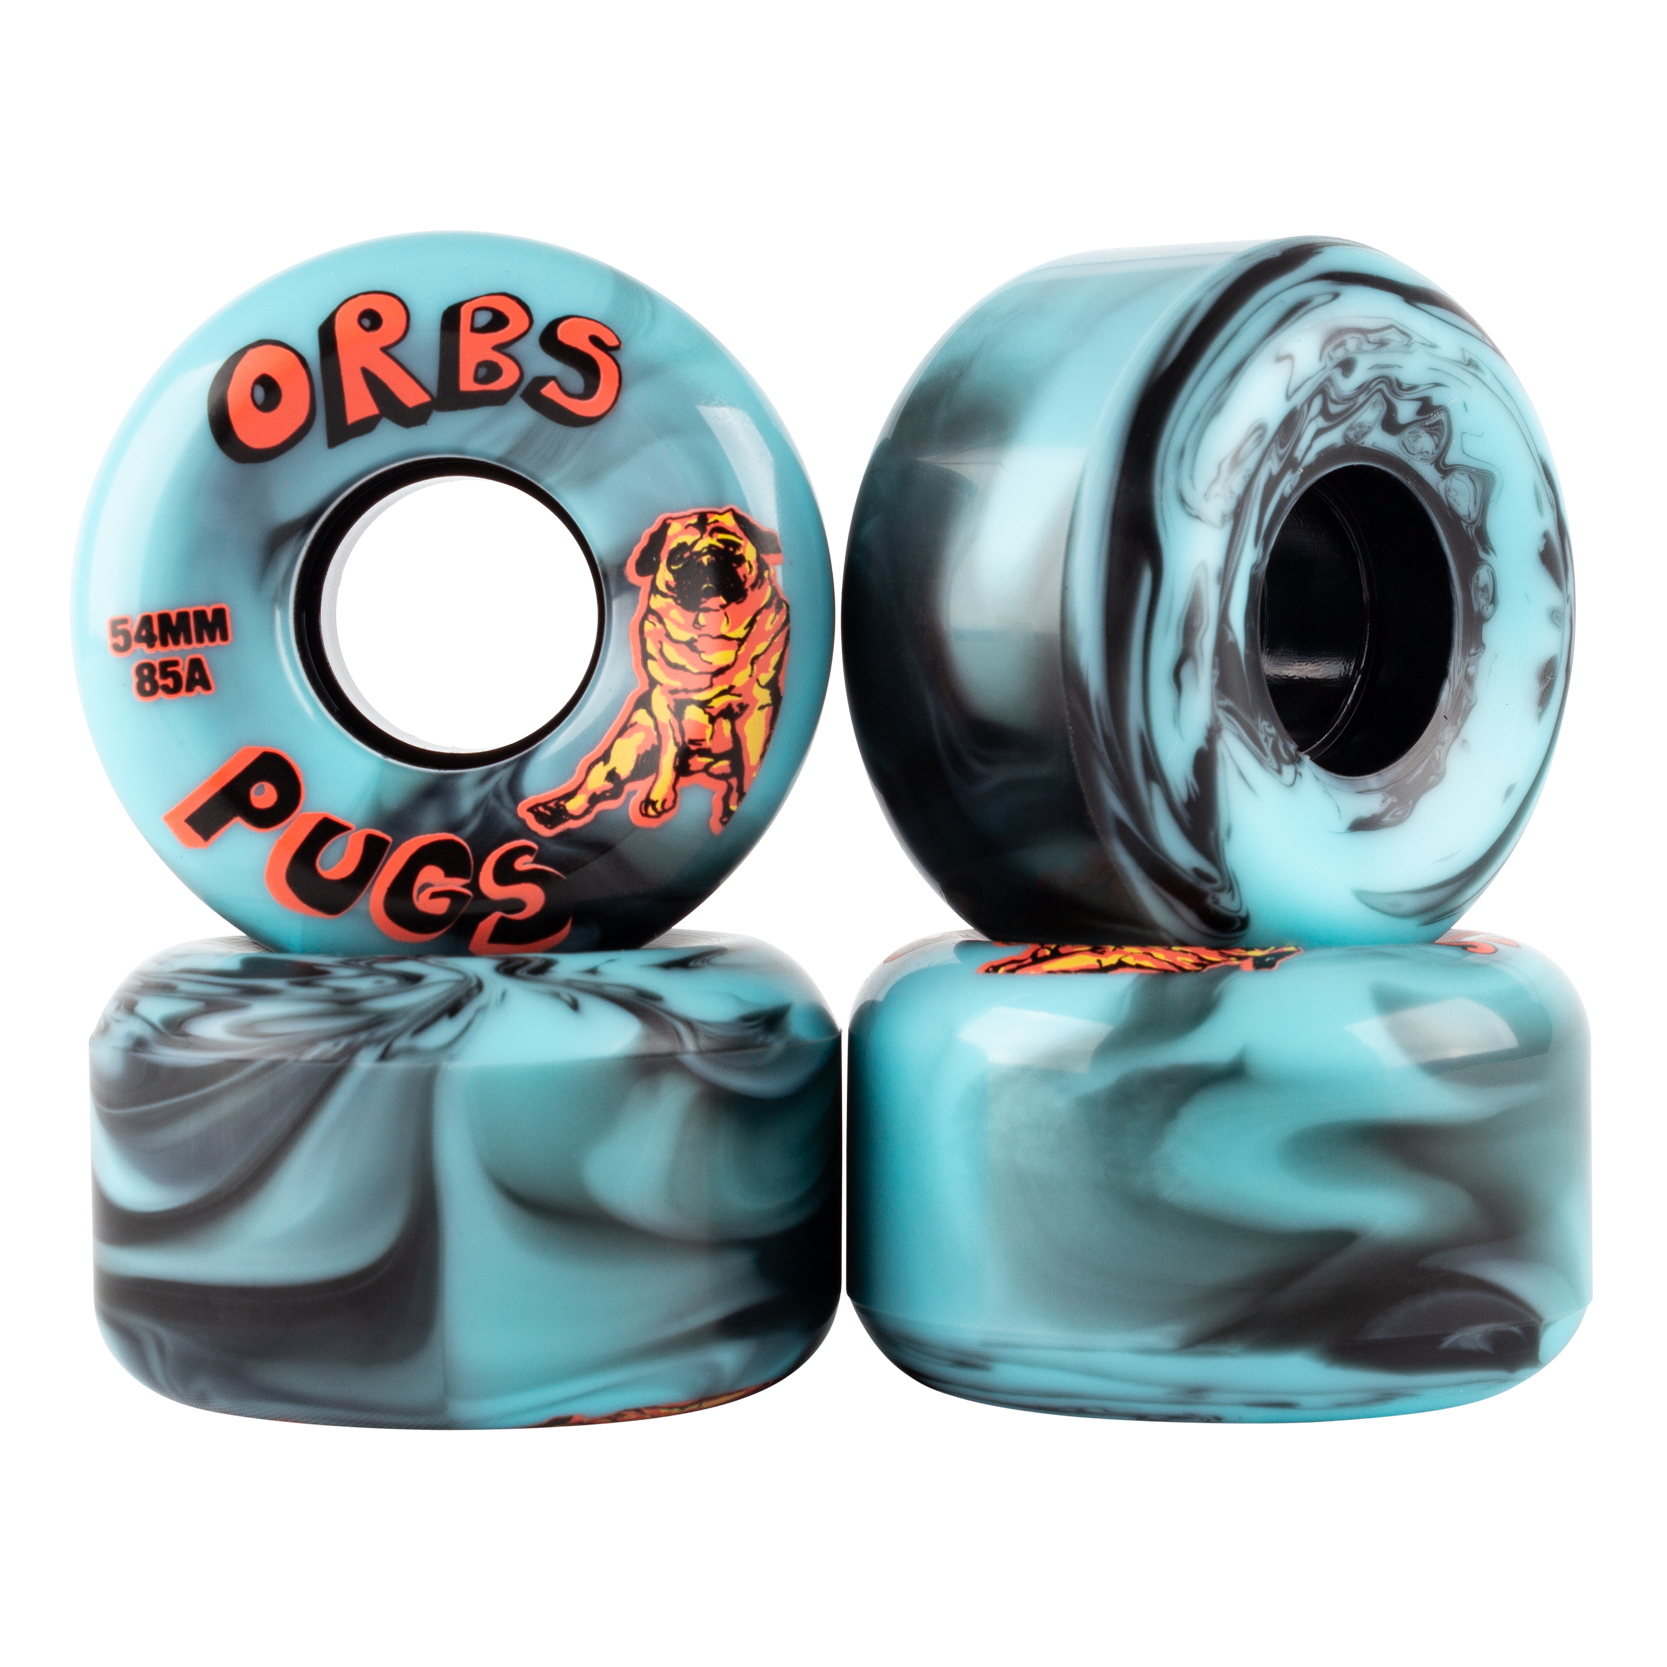 Orbs Pugs Skateboard Wheels